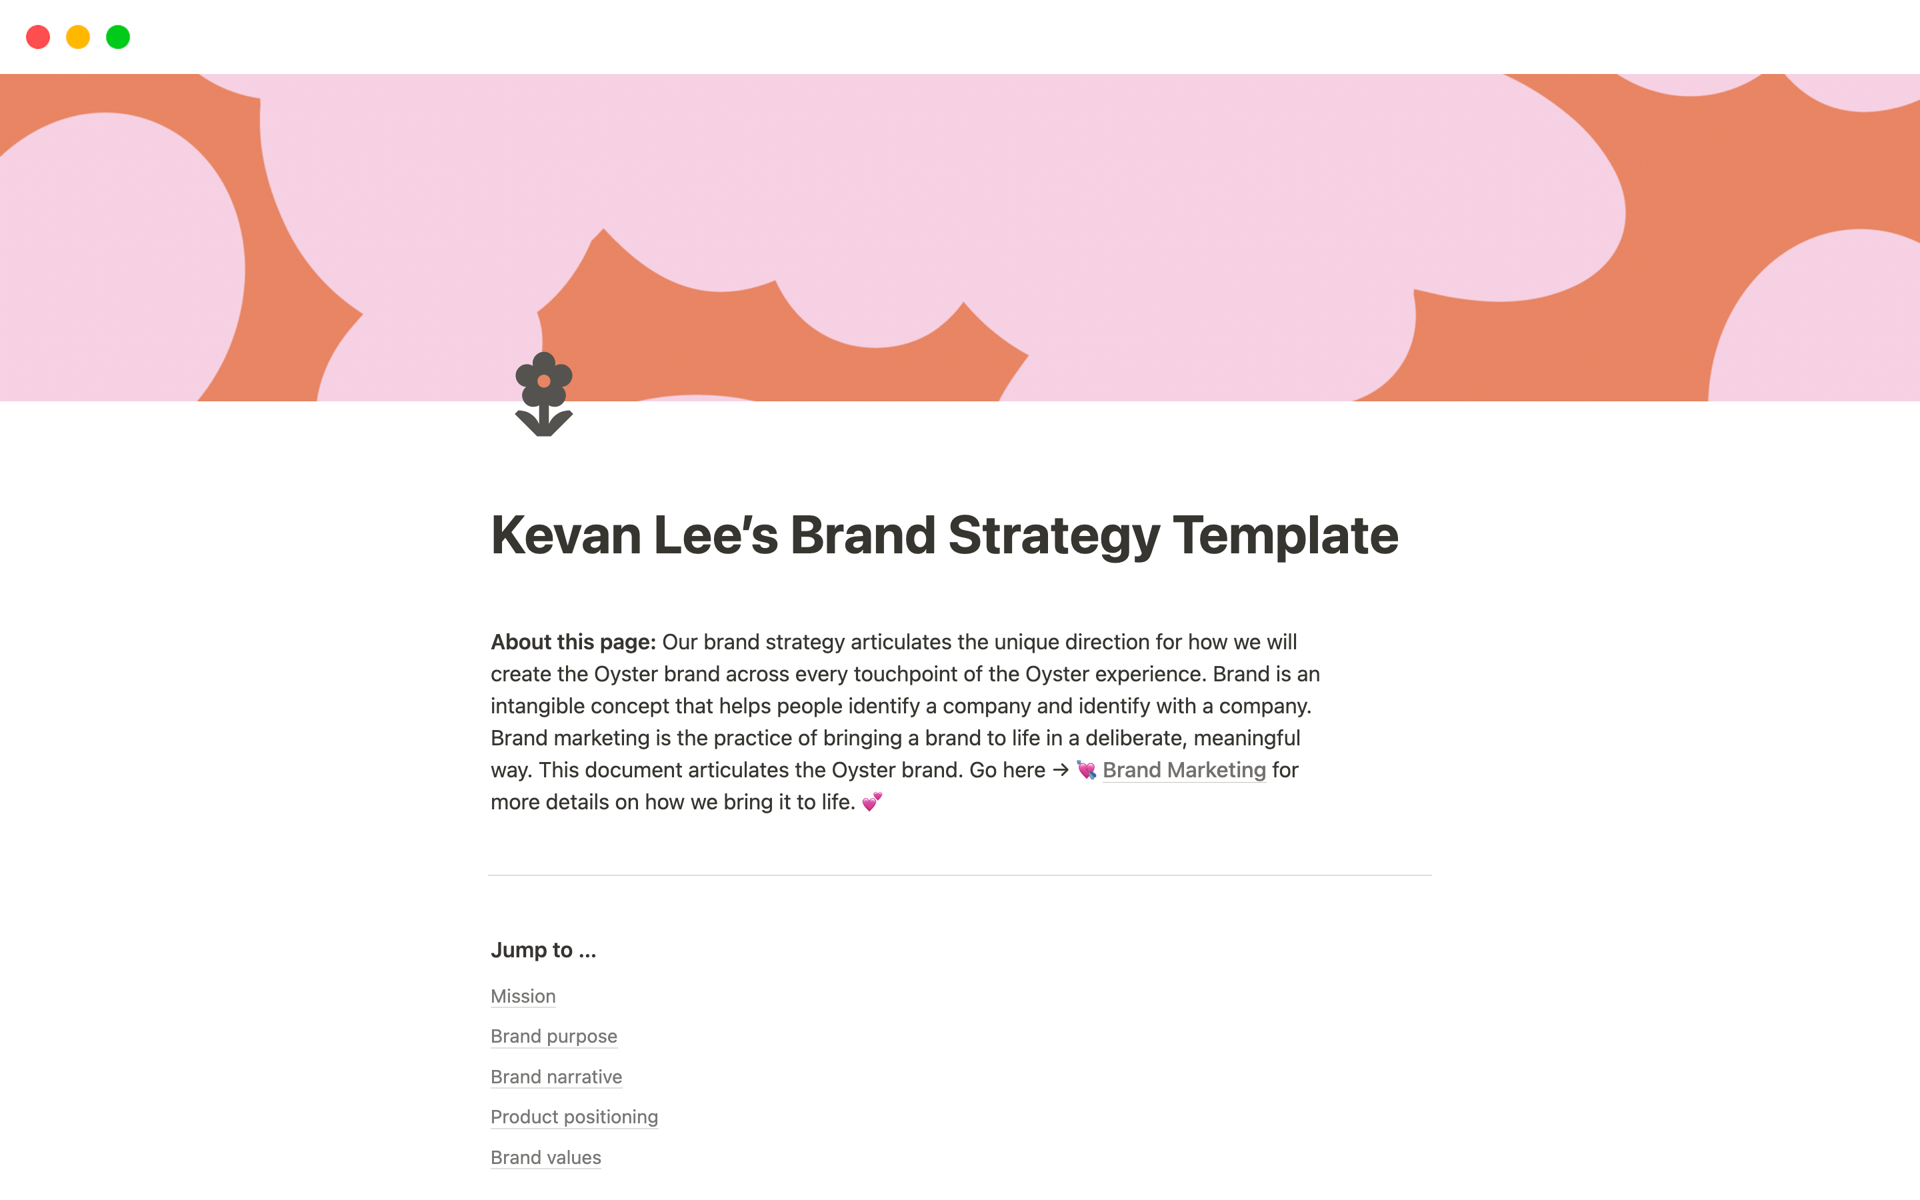 brand-strategy-template-kevan-lee-desktop